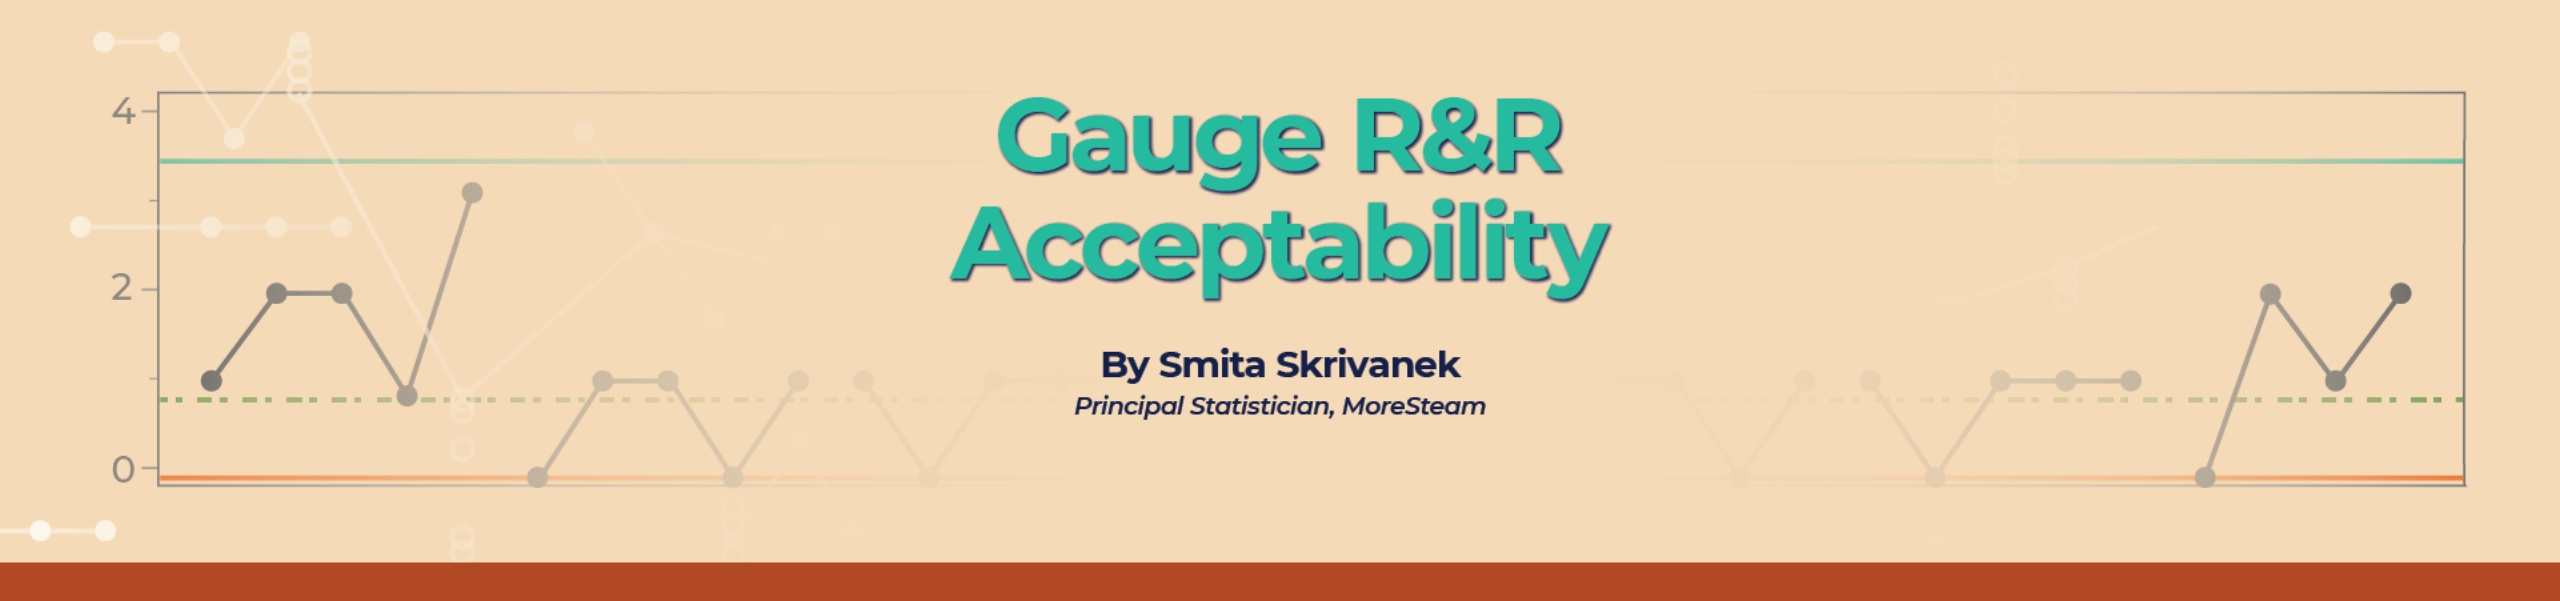 Gauge R&R Acceptability banner